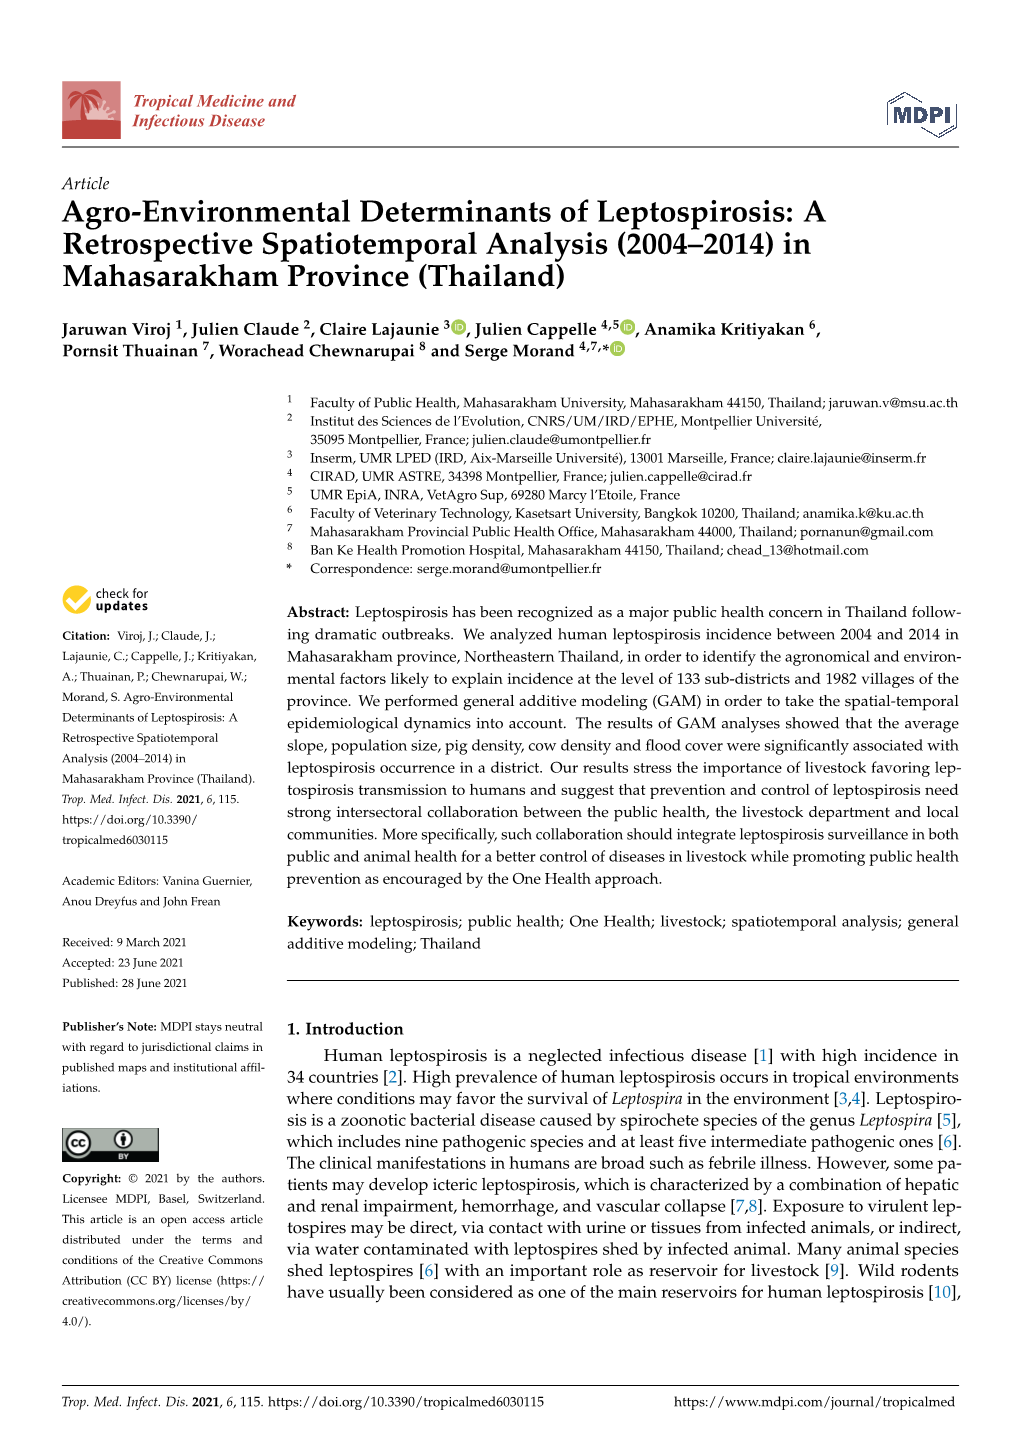 Agro-Environmental Determinants of Leptospirosis: a Retrospective Spatiotemporal Analysis (2004–2014) in Mahasarakham Province (Thailand)